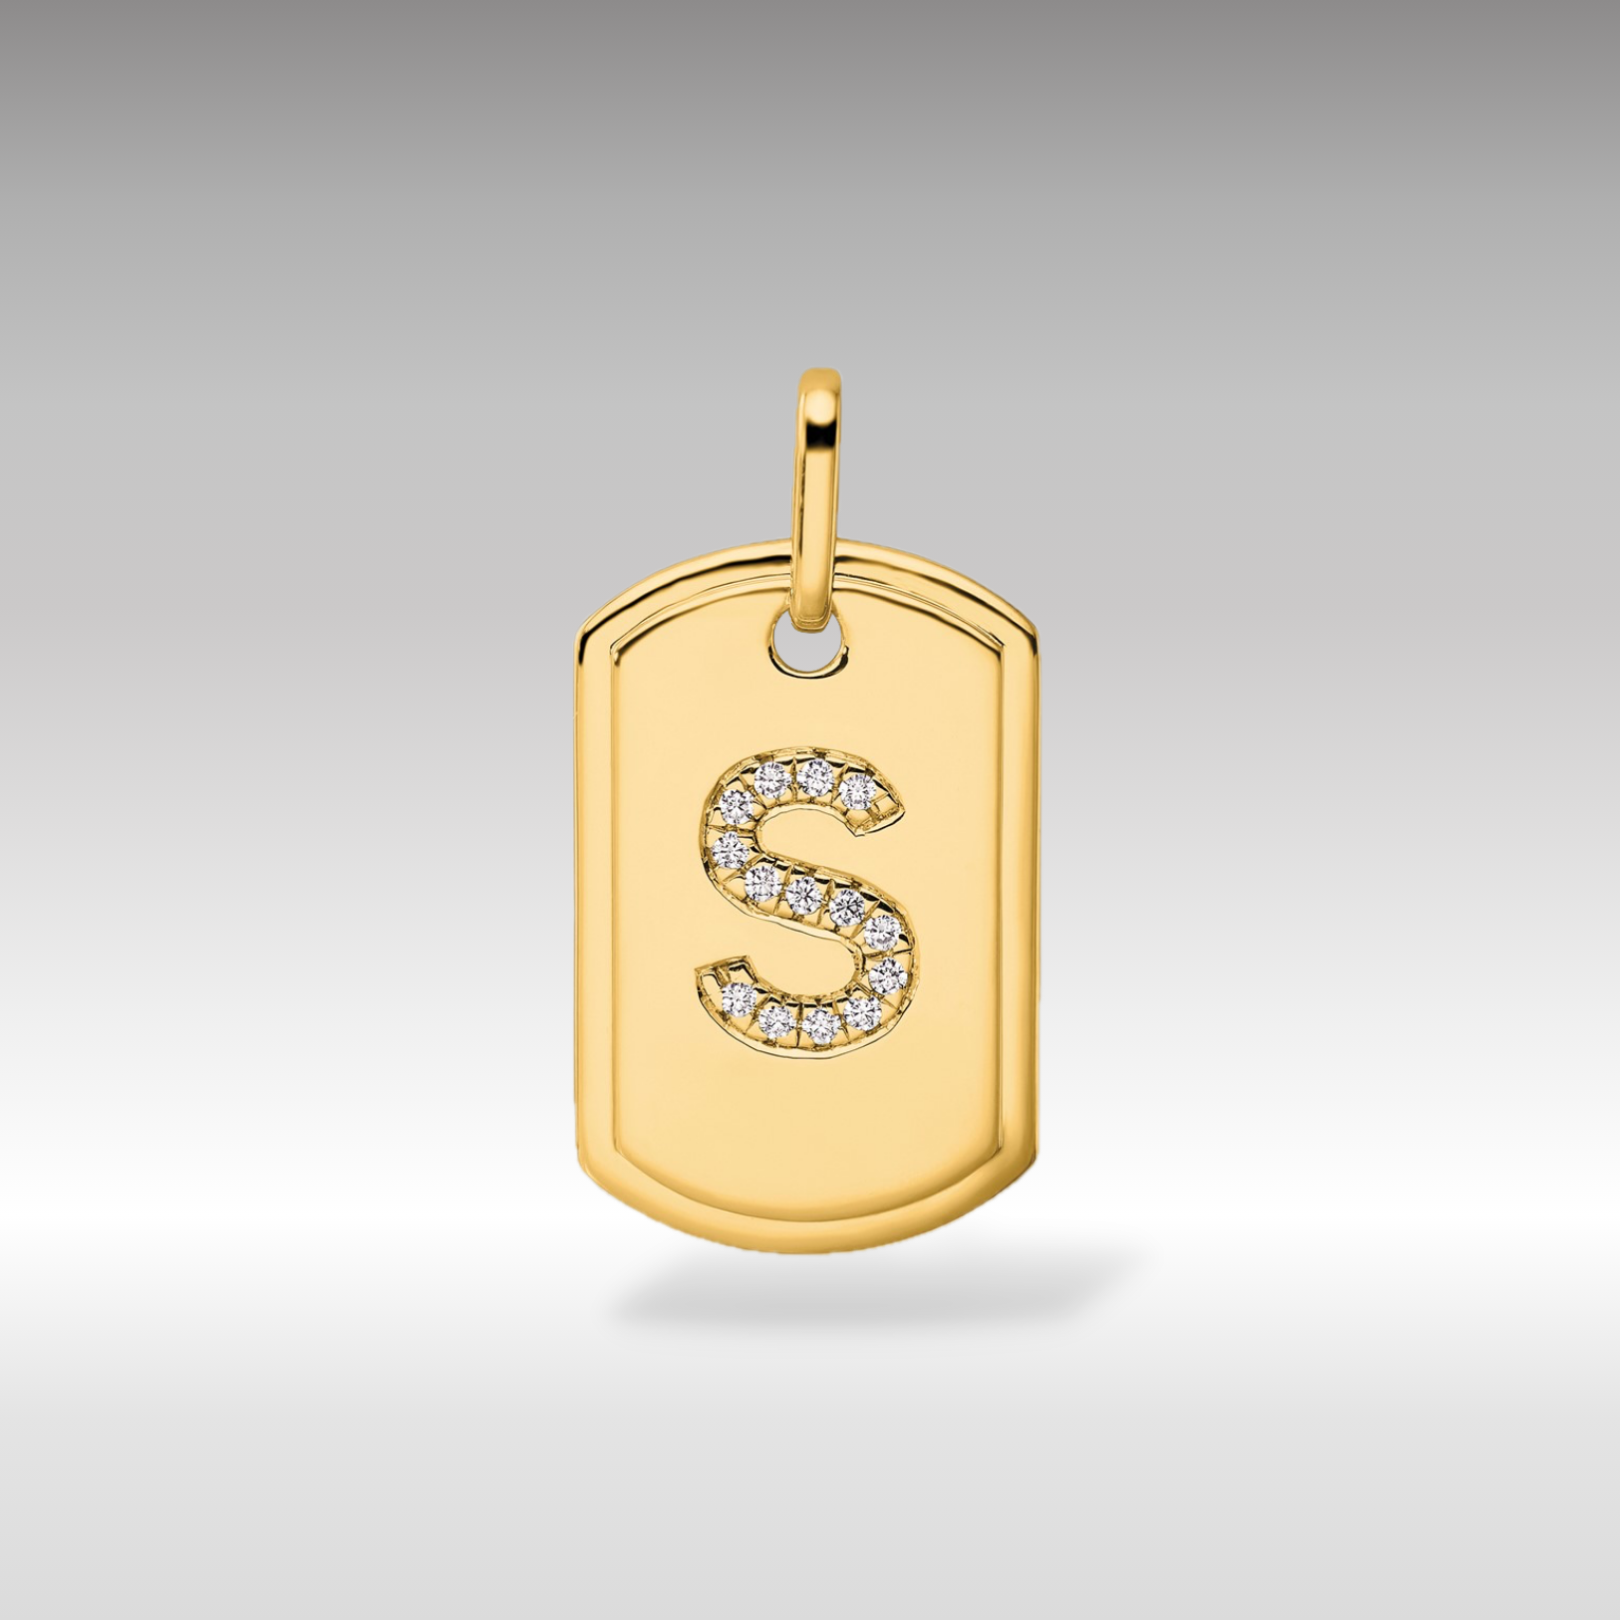 14K Gold Initial "S" Dog Tag With Genuine Diamonds - Charlie & Co. Jewelry